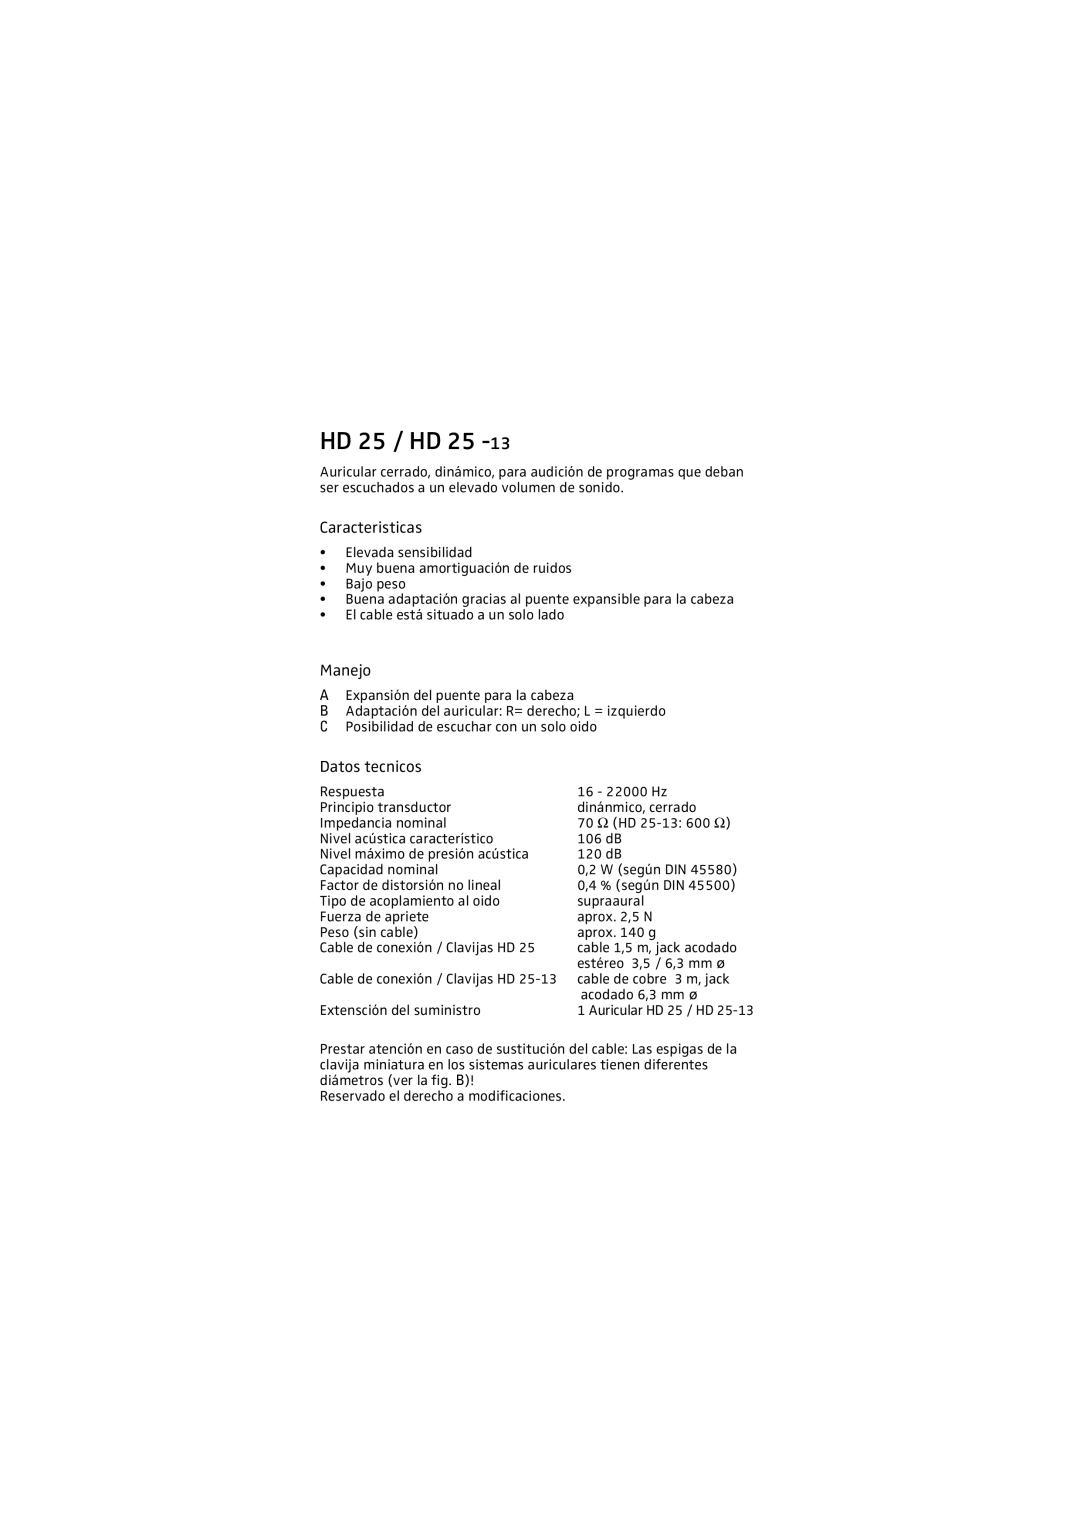 Sennheiser HD 25 - 13 manual Caracteristicas, Manejo, Datos tecnicos, HD 25 / HD 